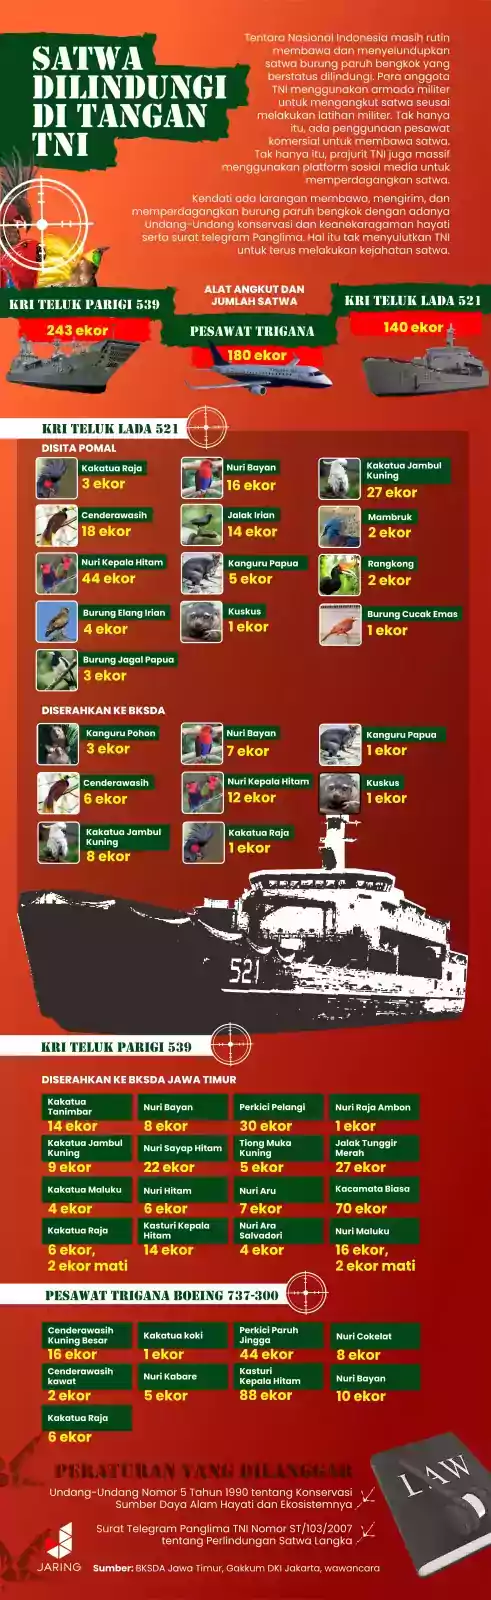 Infografis mengenai kasus penyelundupan satwa dilindungi oleh anggota TNI. | Sumber: Jaring.id